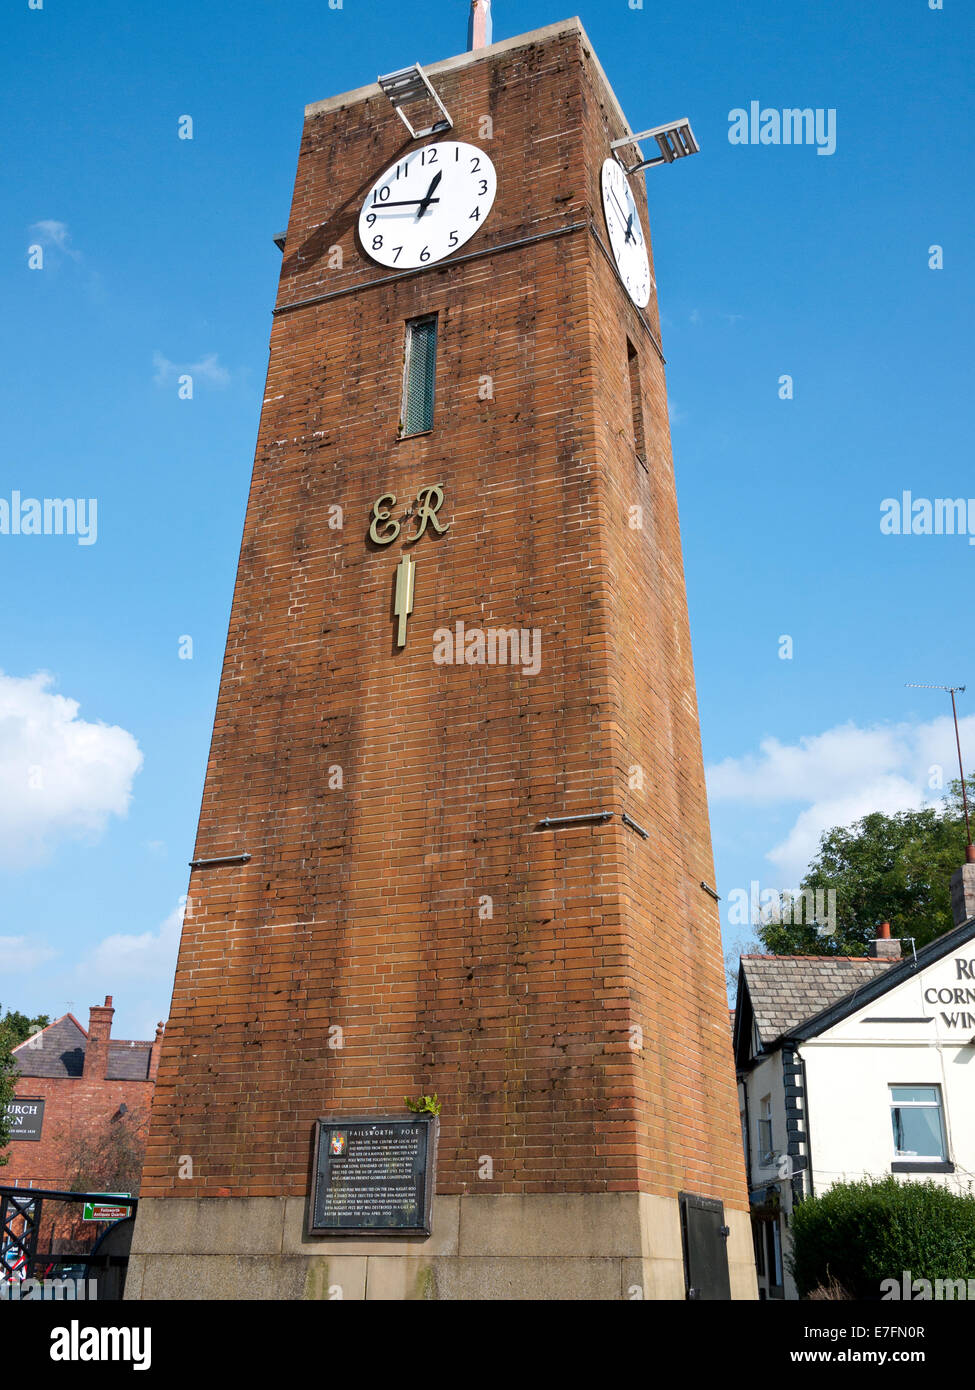 Failsworth Pole, Failsworth, Oldham, Greater Manchester, UK. Stock Photo